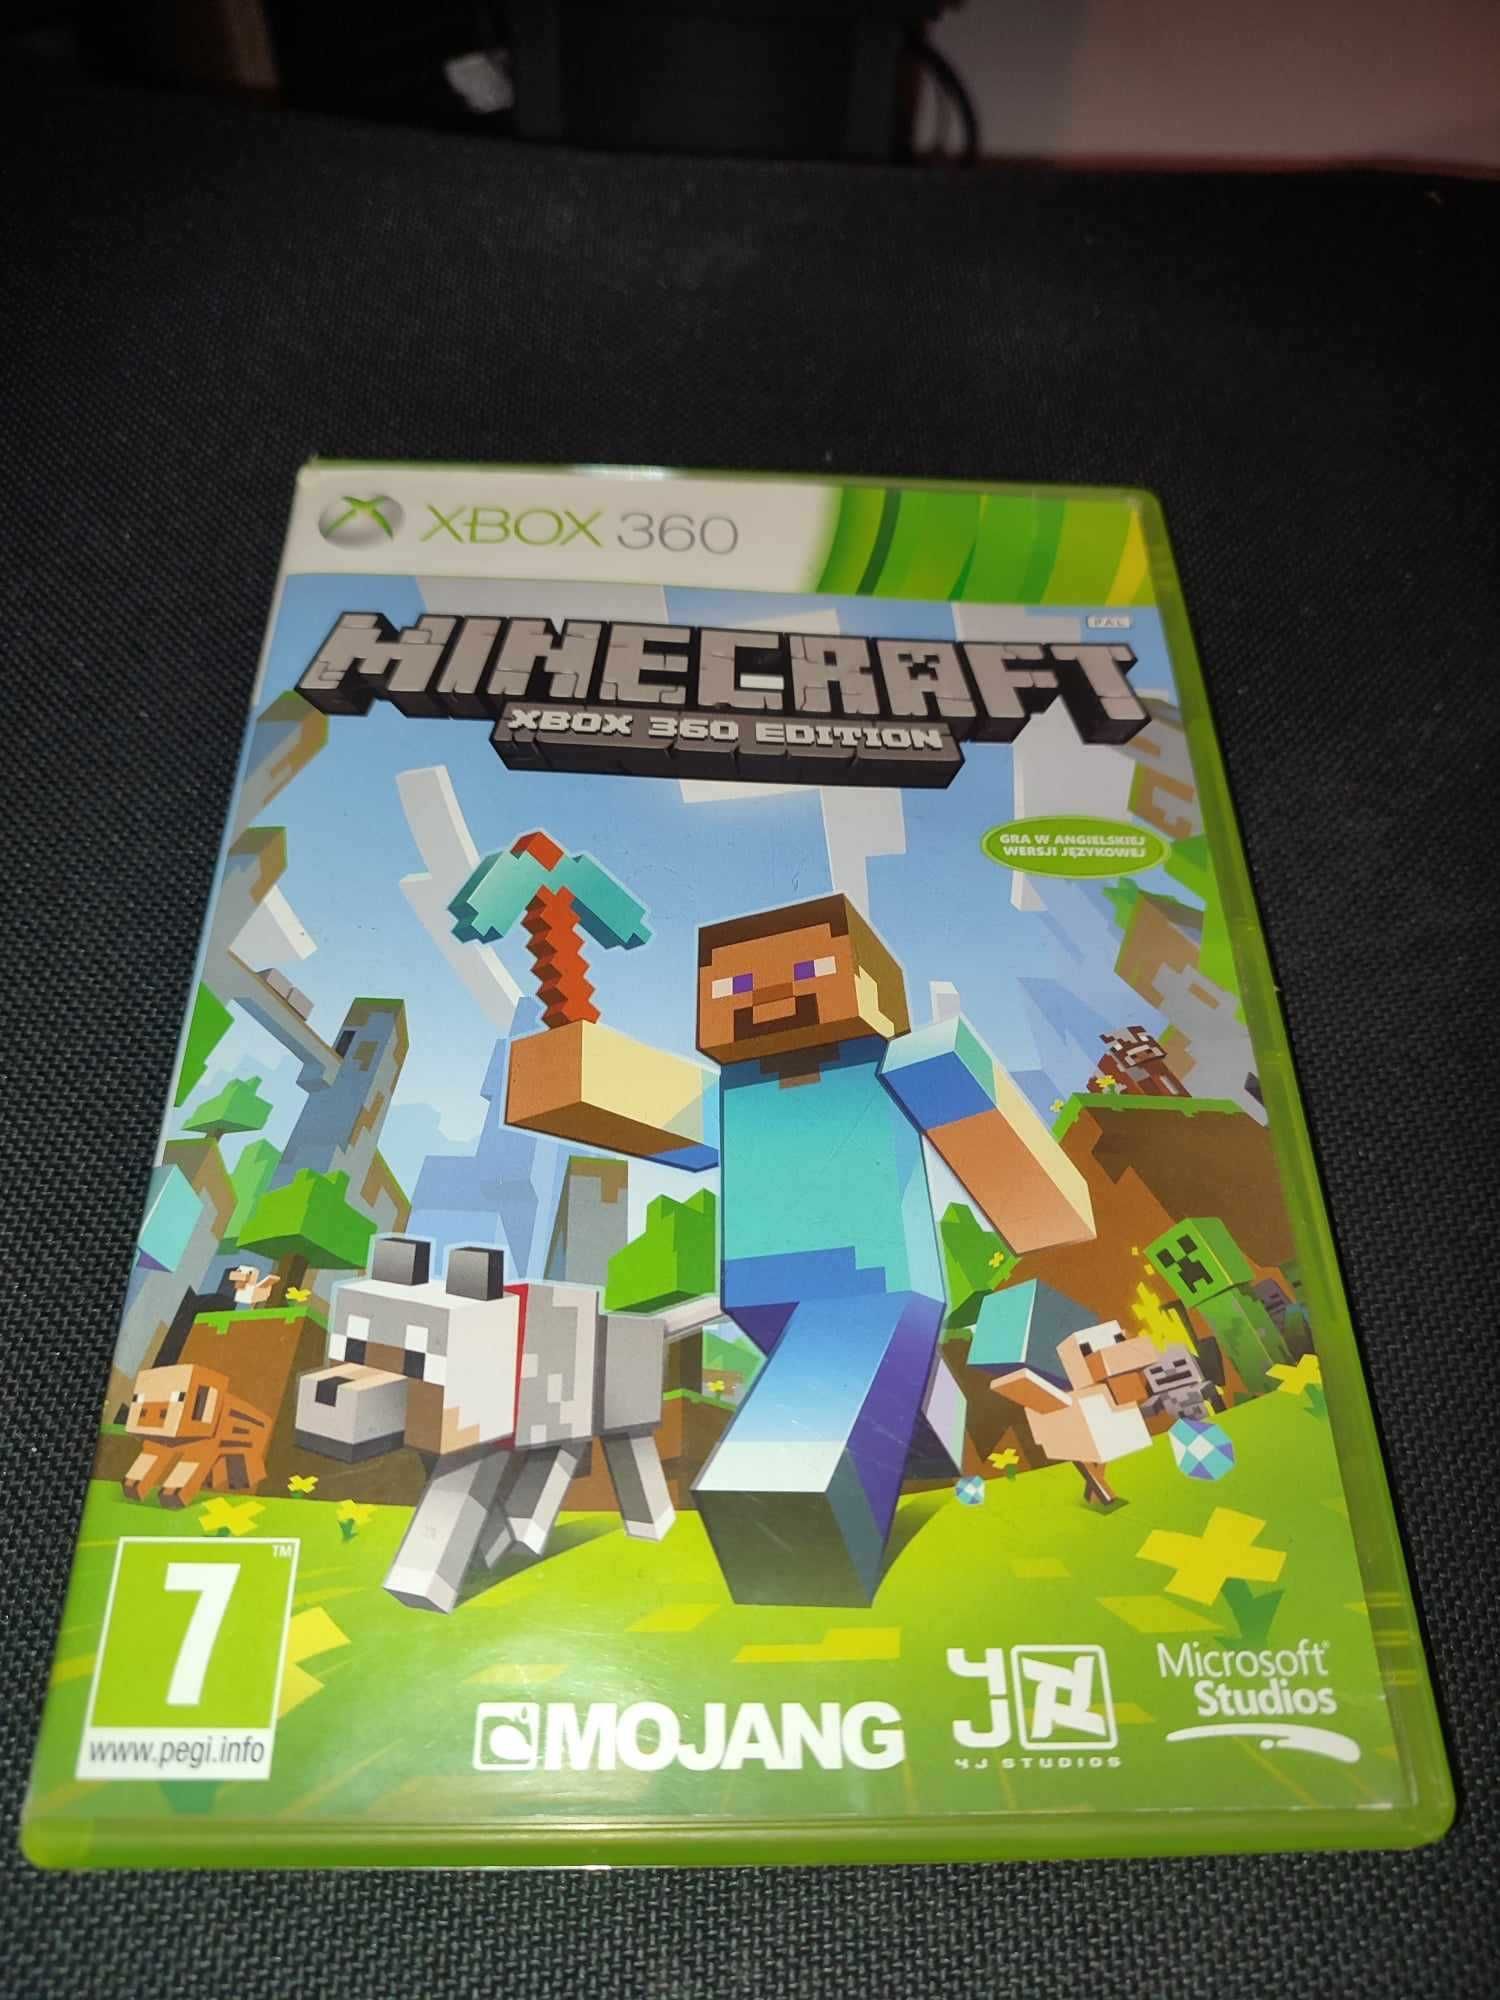 Okazja!!! Gra Minecraft na Xbox 360 !!! Polecam!